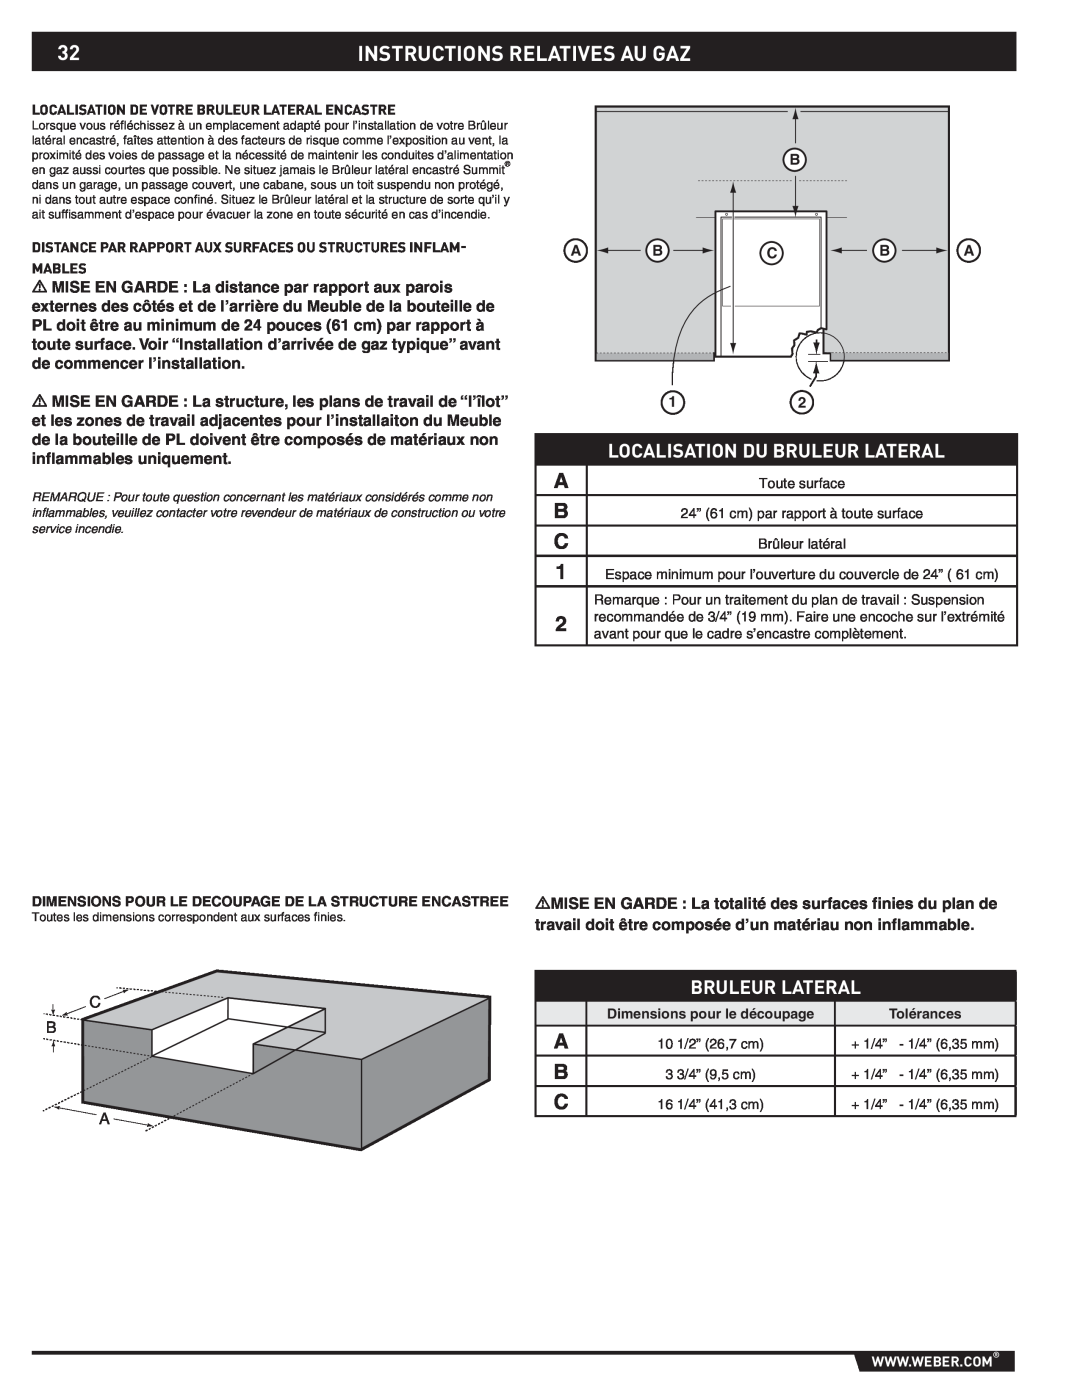 Weber 89796 manual Instructions Relatives Au Gaz, Localisation Du Bruleur Lateral 